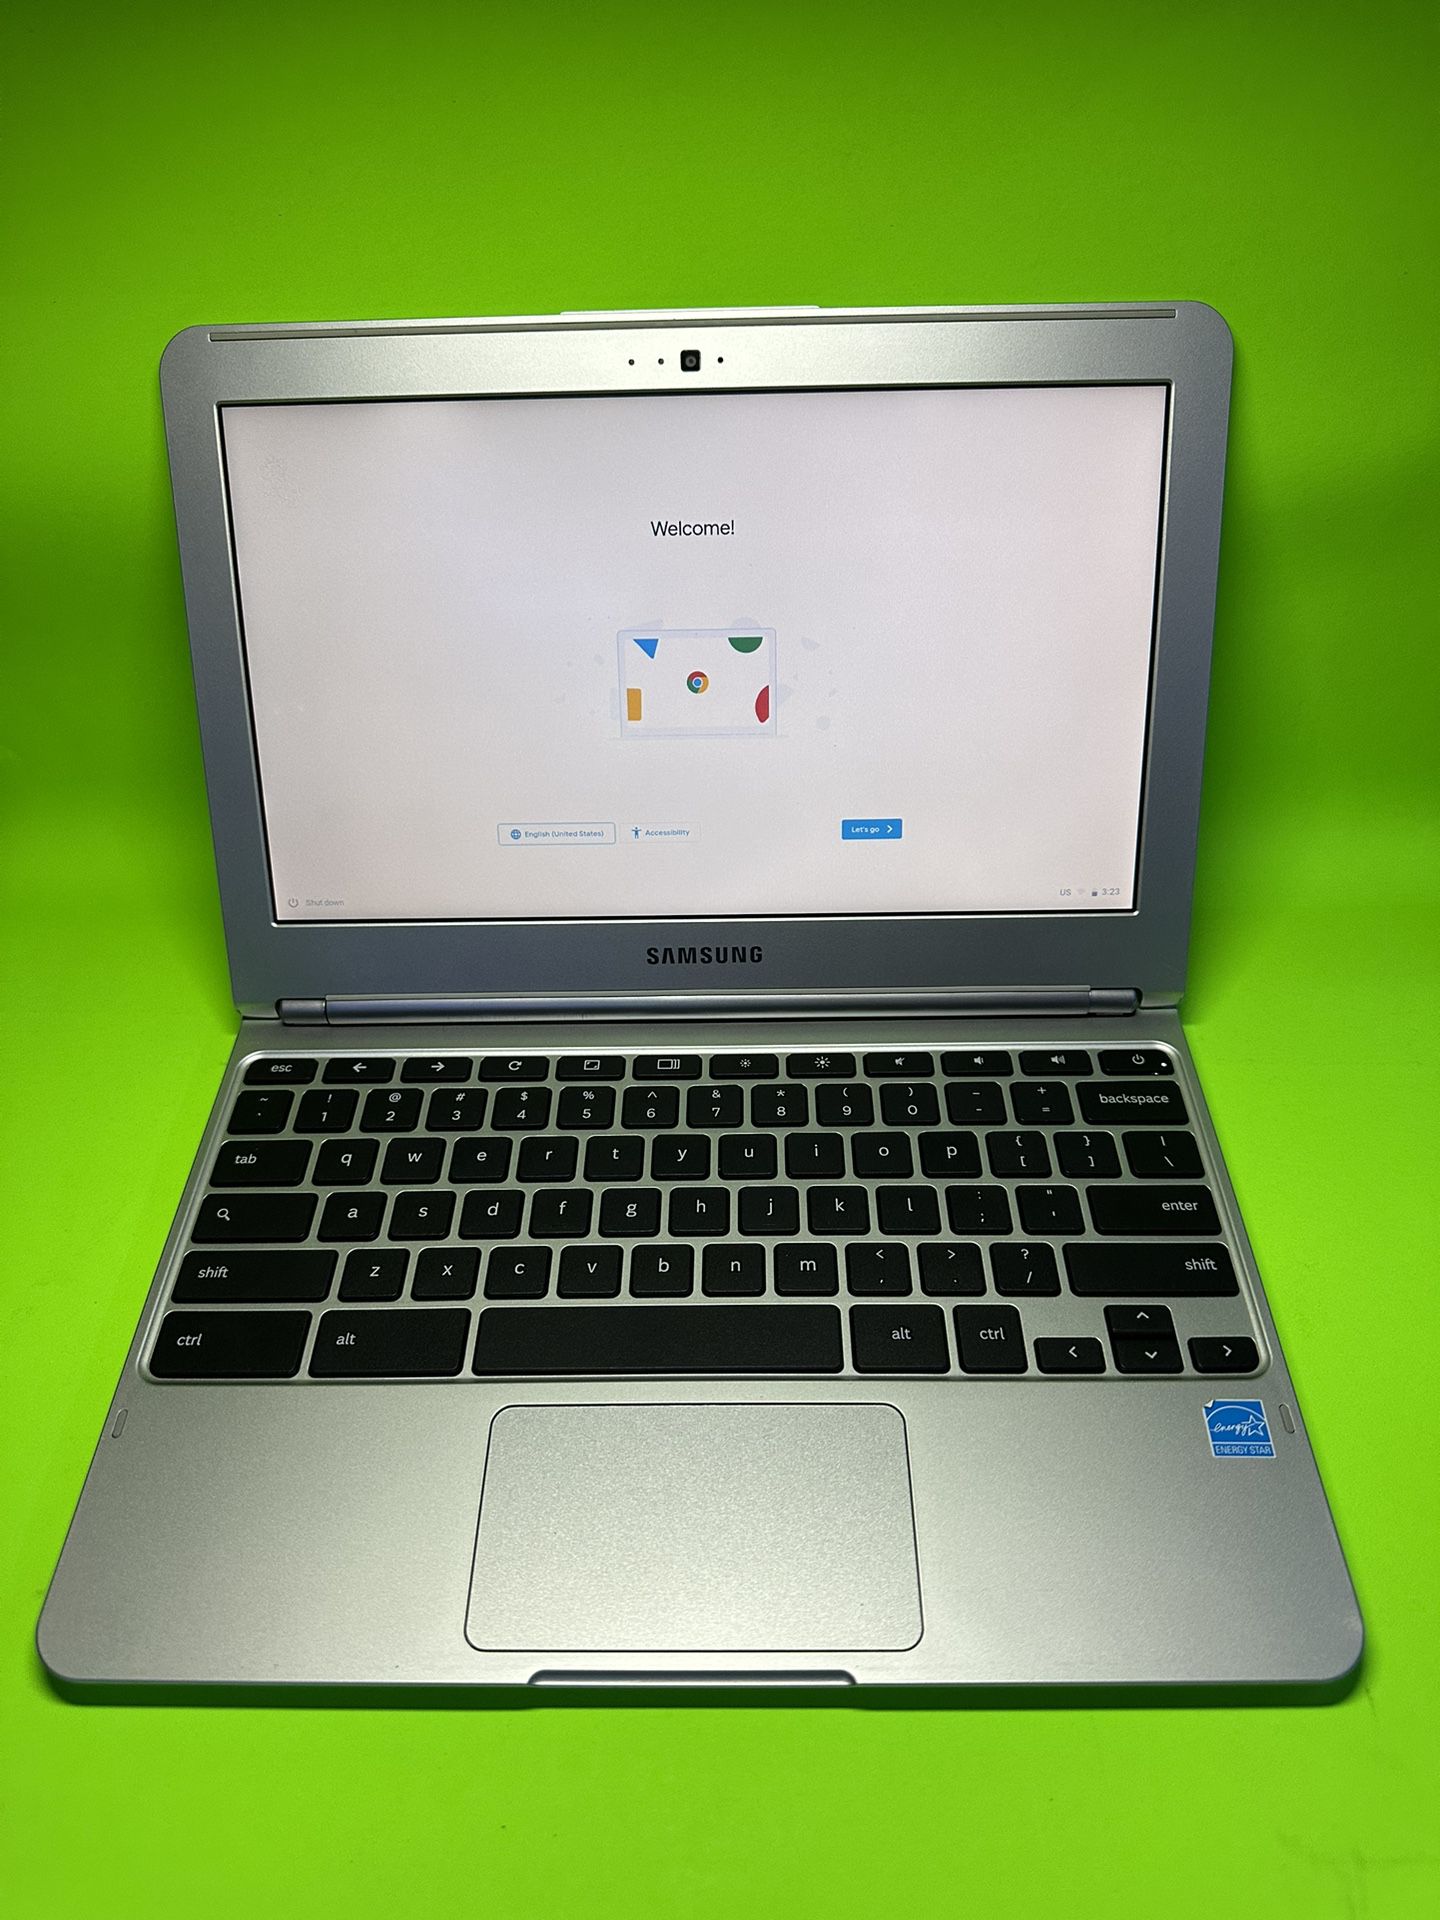 Samsung Chromebook XE303 C12 11.6 1.7GHz, 2GB Ram, 16GB SSD WI-FI HDMI USB 3.0